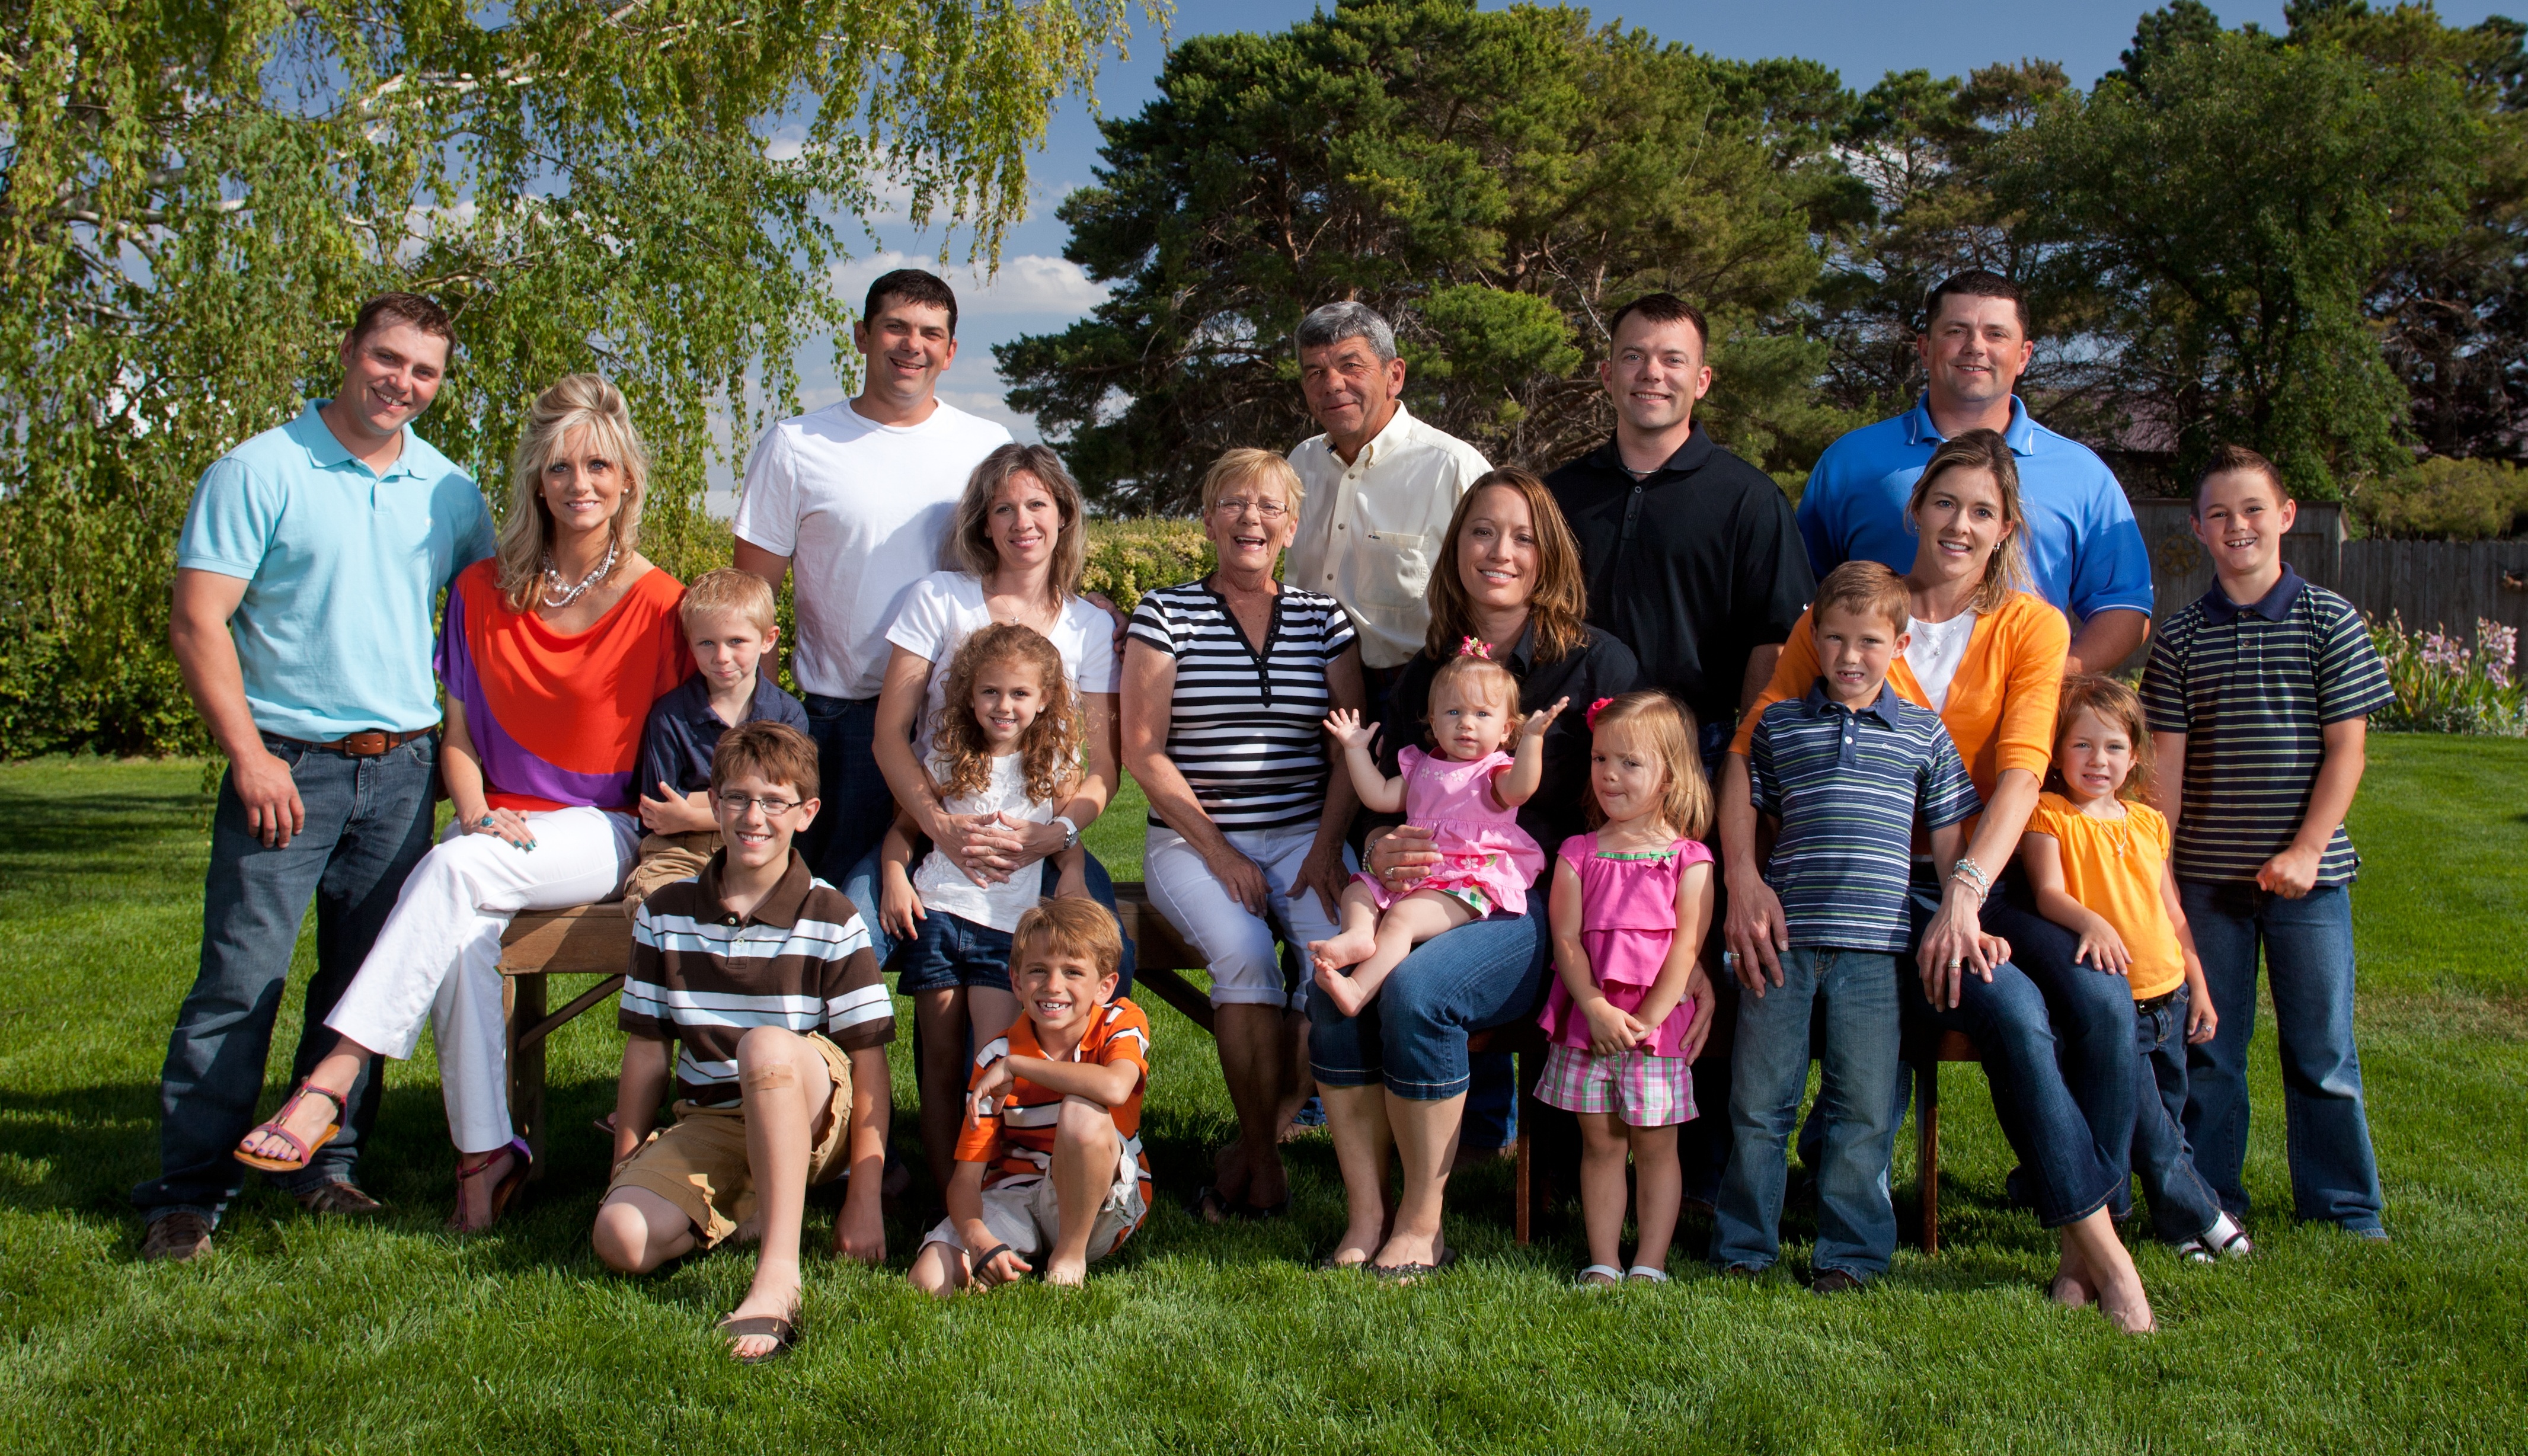 Privat family. Большая семья. Большая дружная семья. Фотография семьи. Большая счастливая семья.